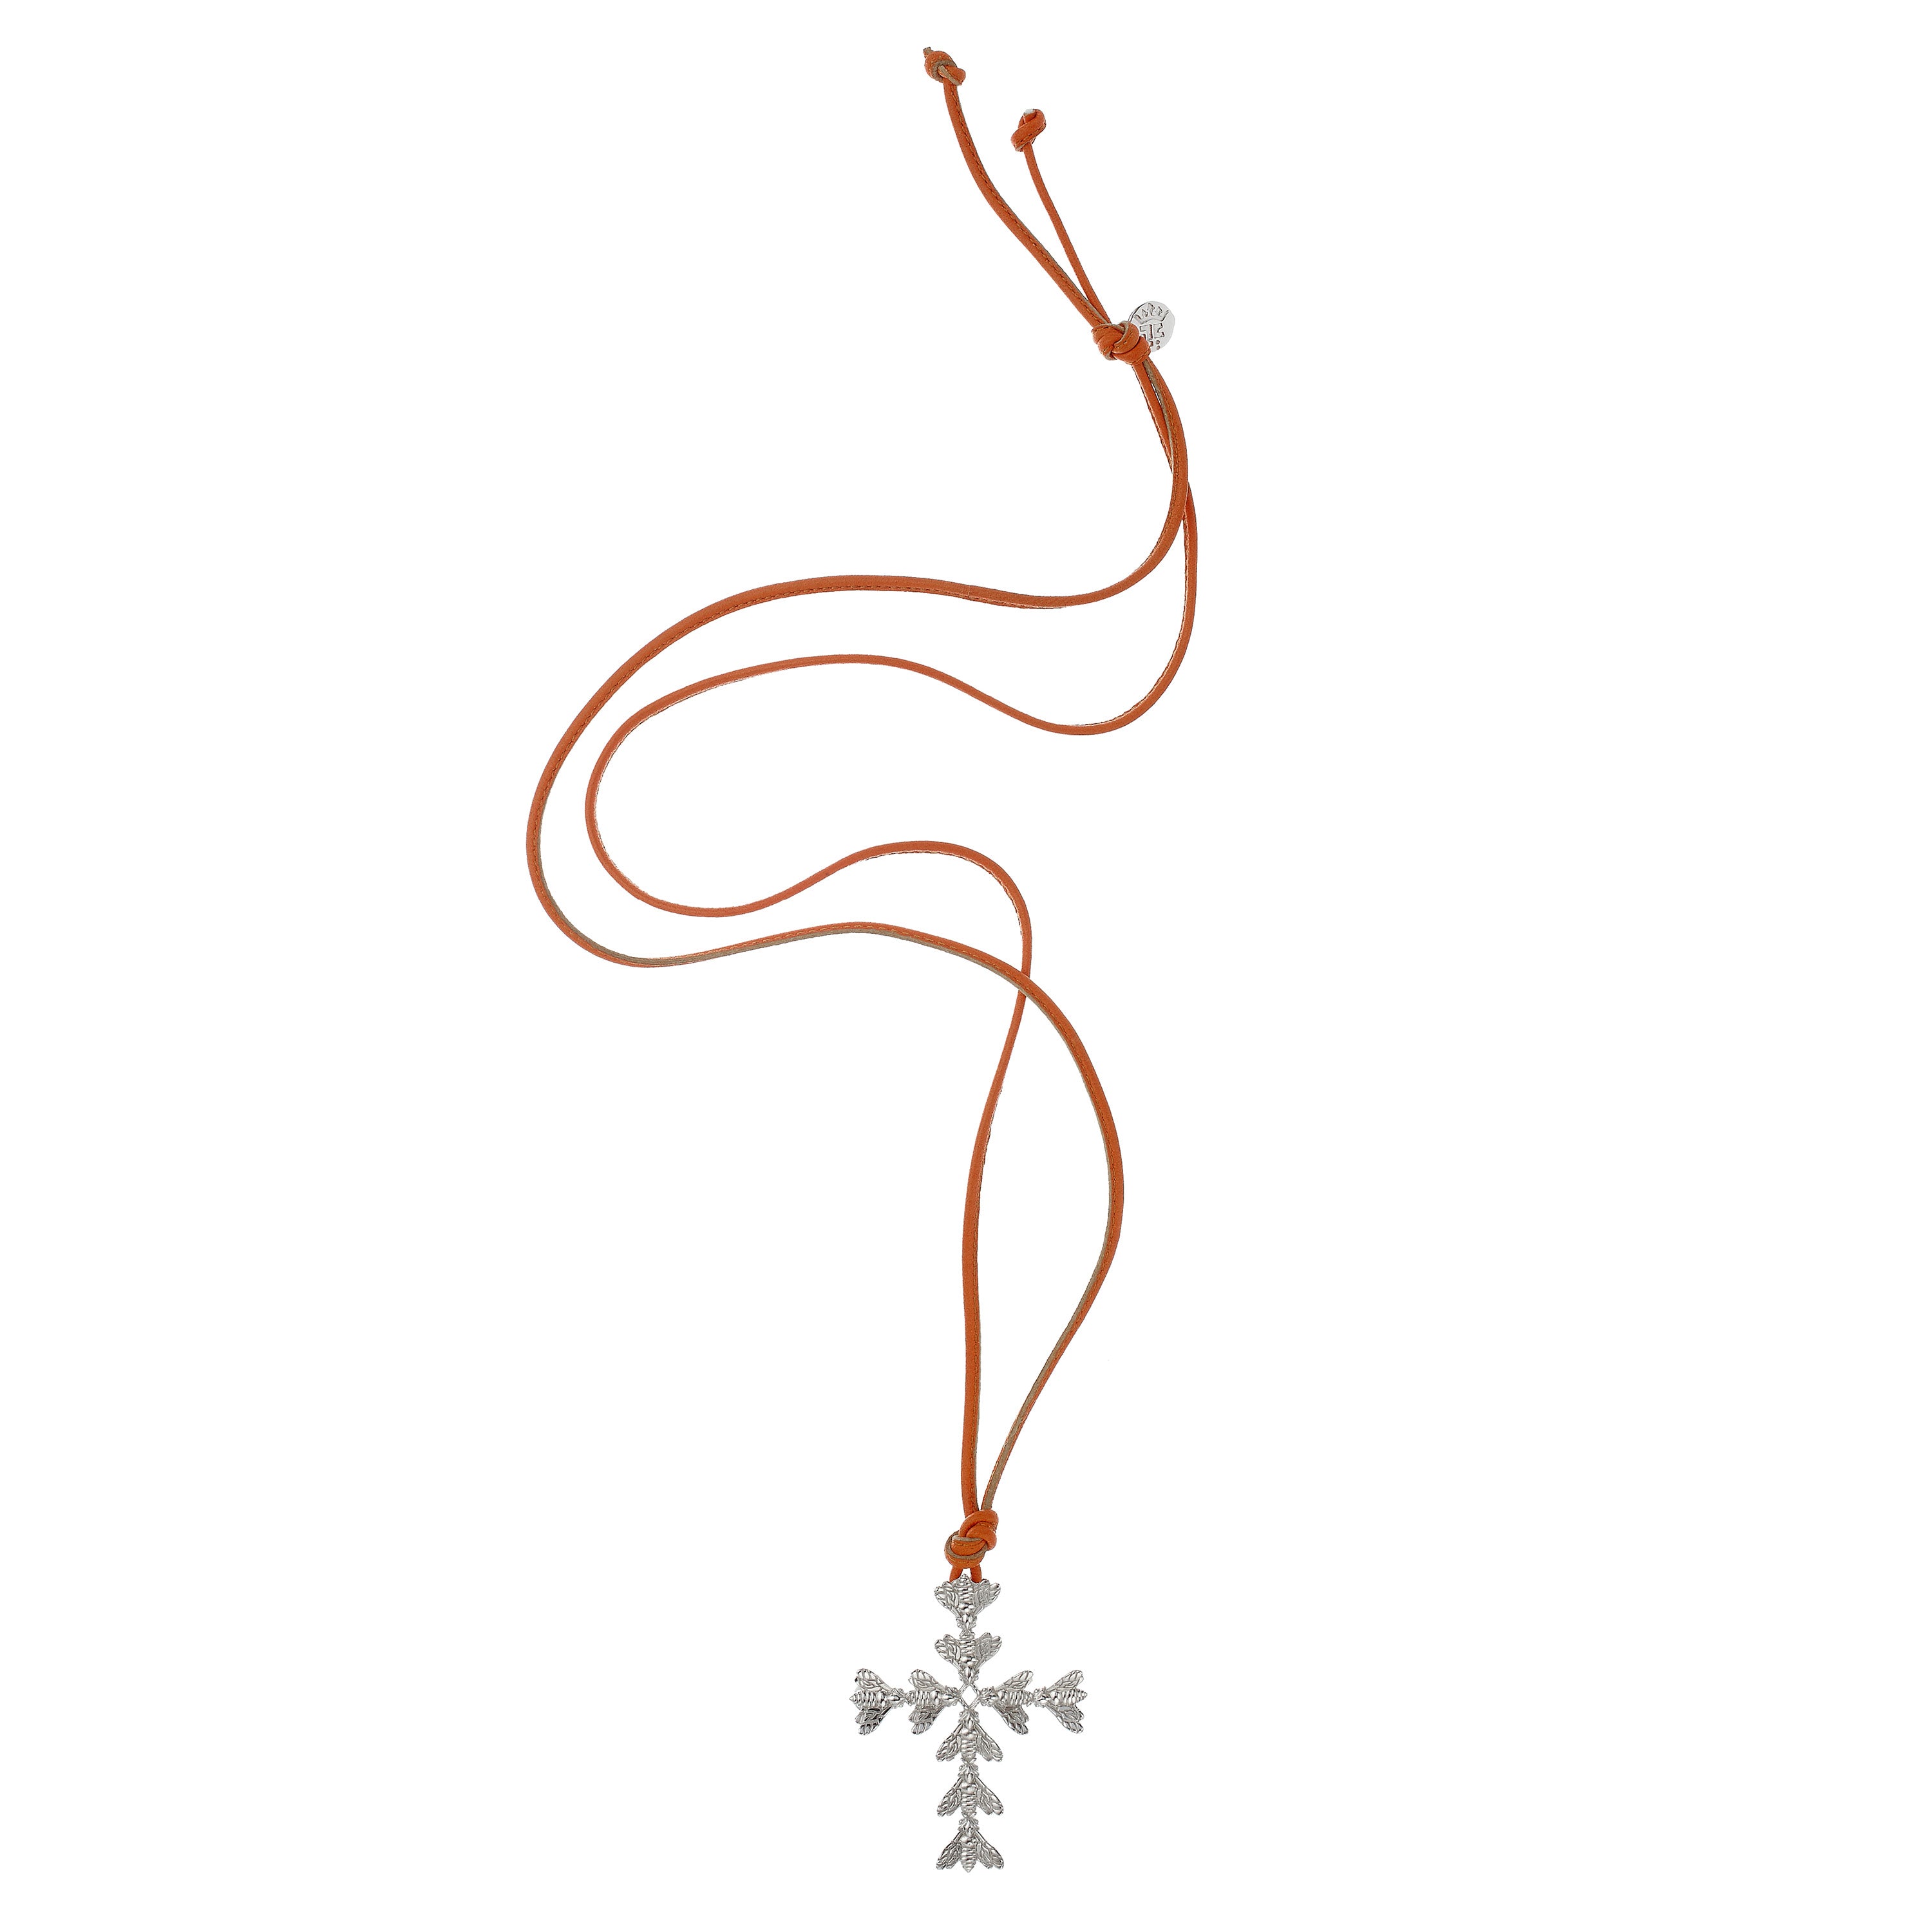 Bee Queen Orange Leather Necklace with Bee Cross